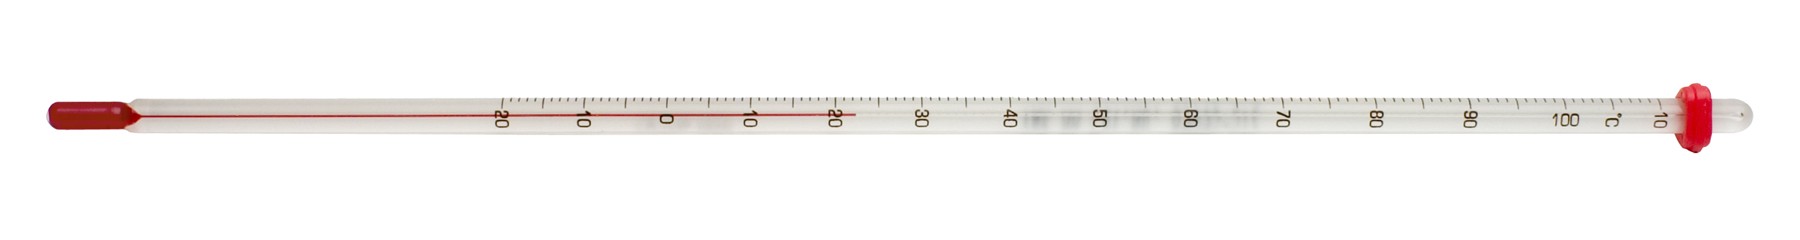 SP Bel-Art, H-B DURAC General Purpose Liquid-In-Glass Laboratory Thermometer; 0 to 230F, 76mm Immersion, Organic Liquid Fill